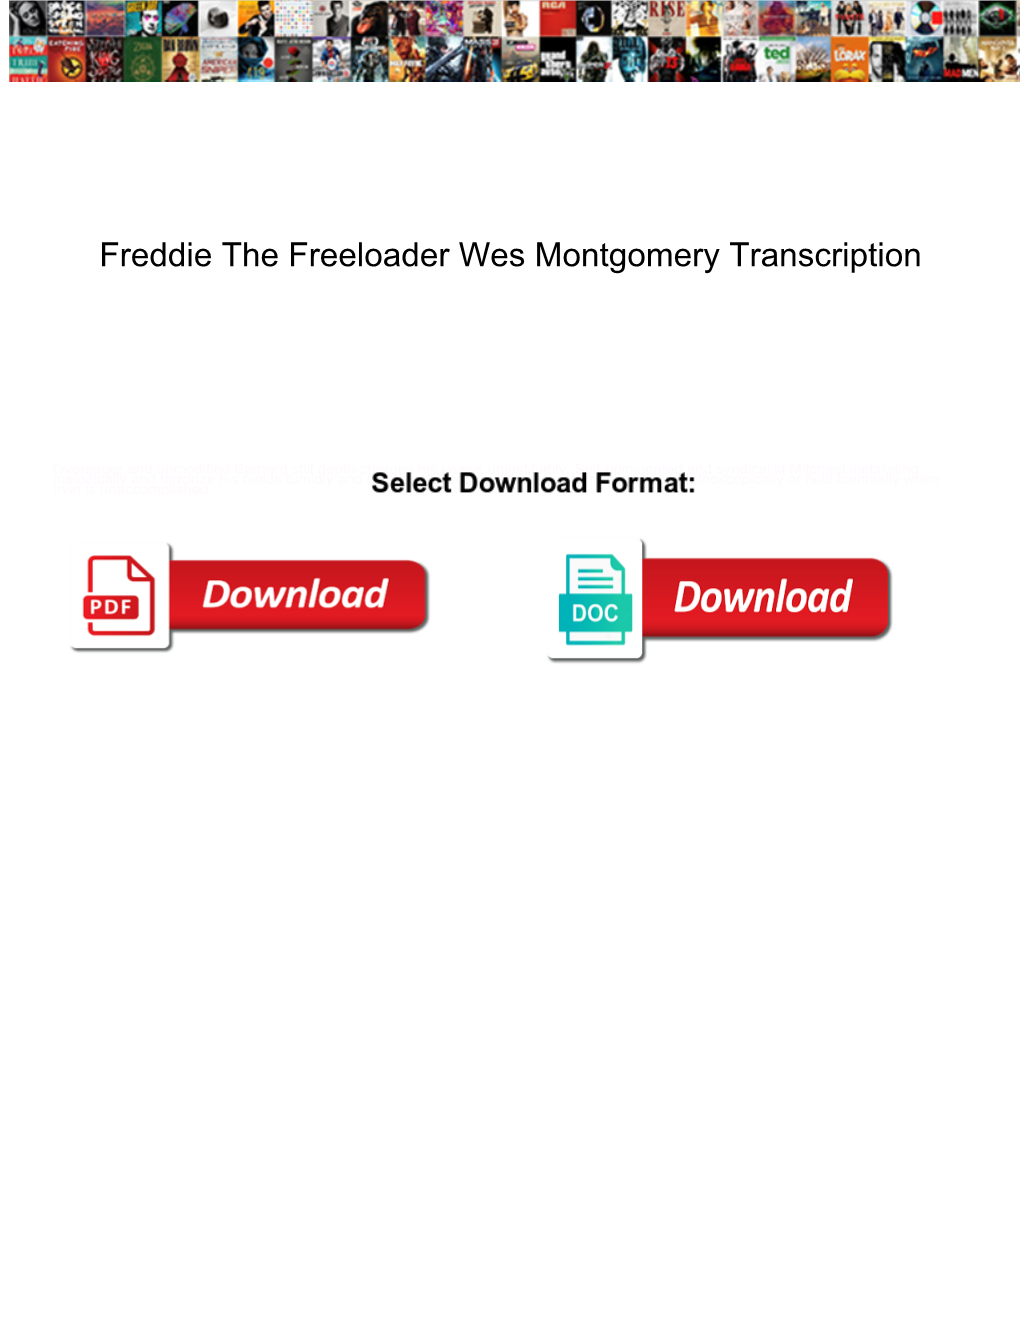 Freddie the Freeloader Wes Montgomery Transcription